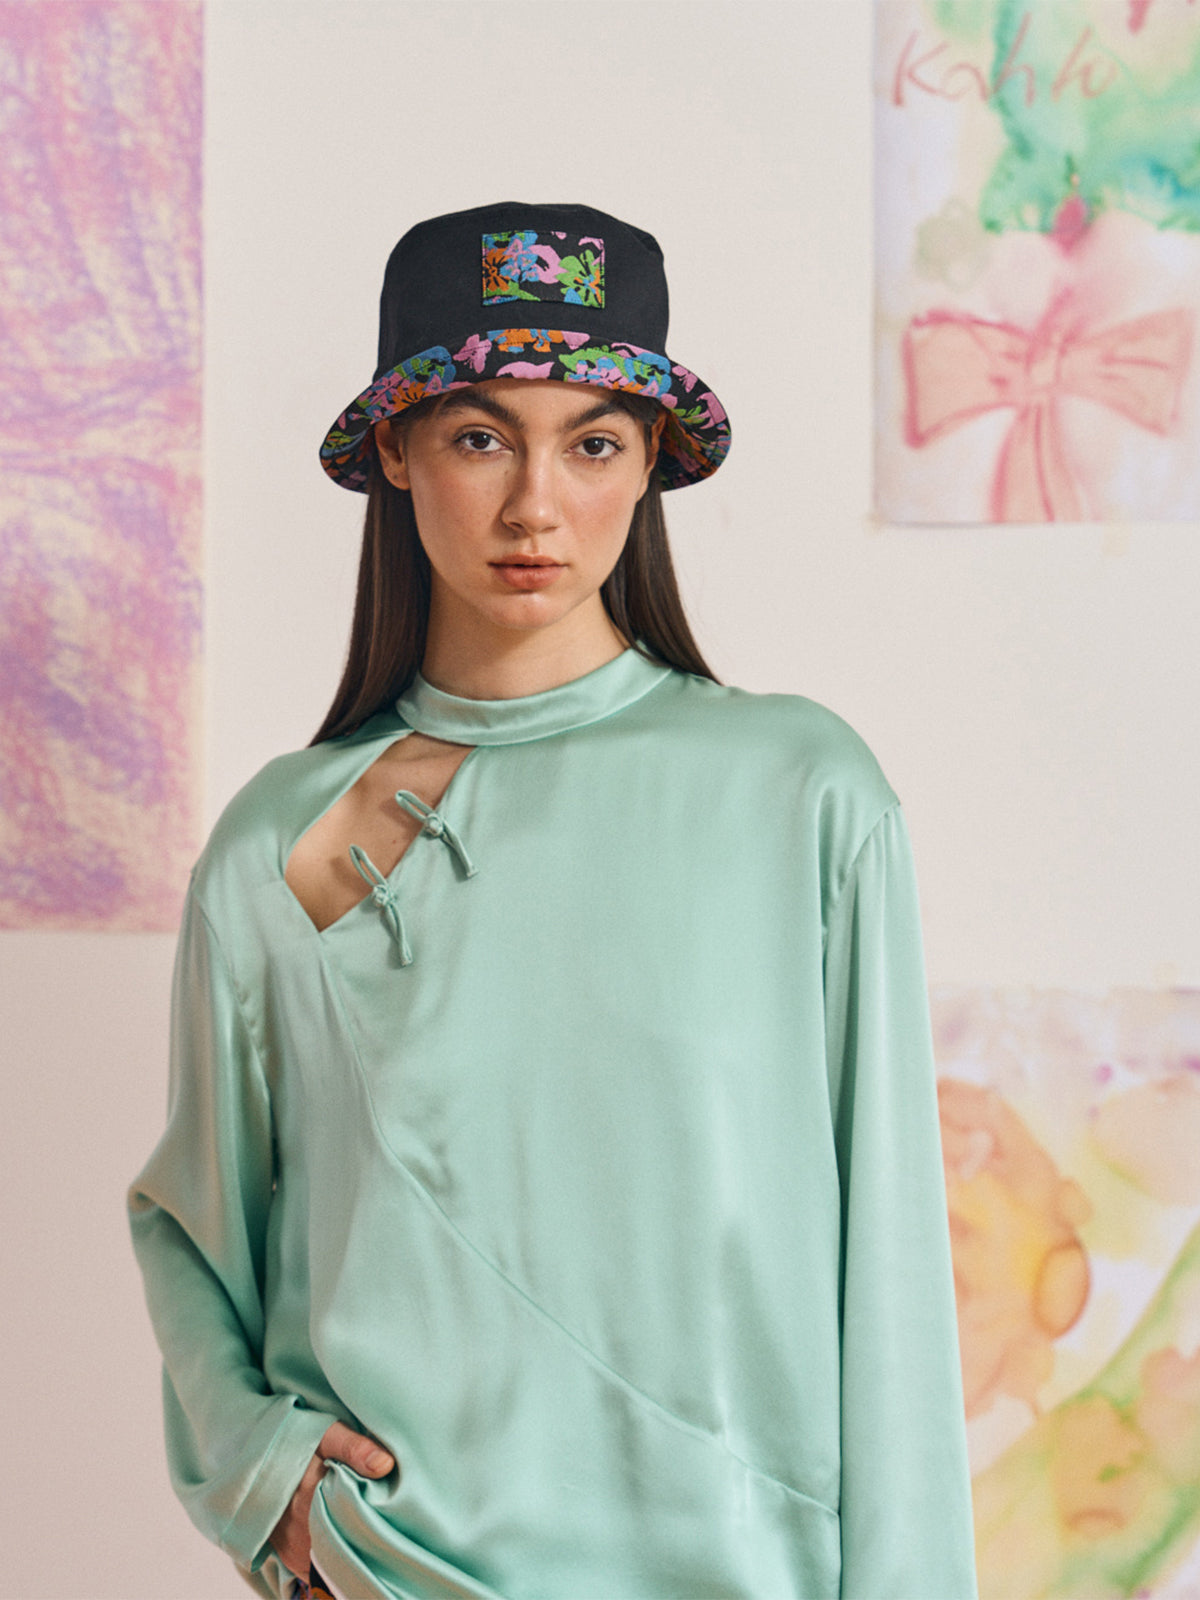 FRIDA X LOST PATTERN "Frida's Garden" Jacquard Reversible Bucket Hat - Black - LOST PATTERN Hats